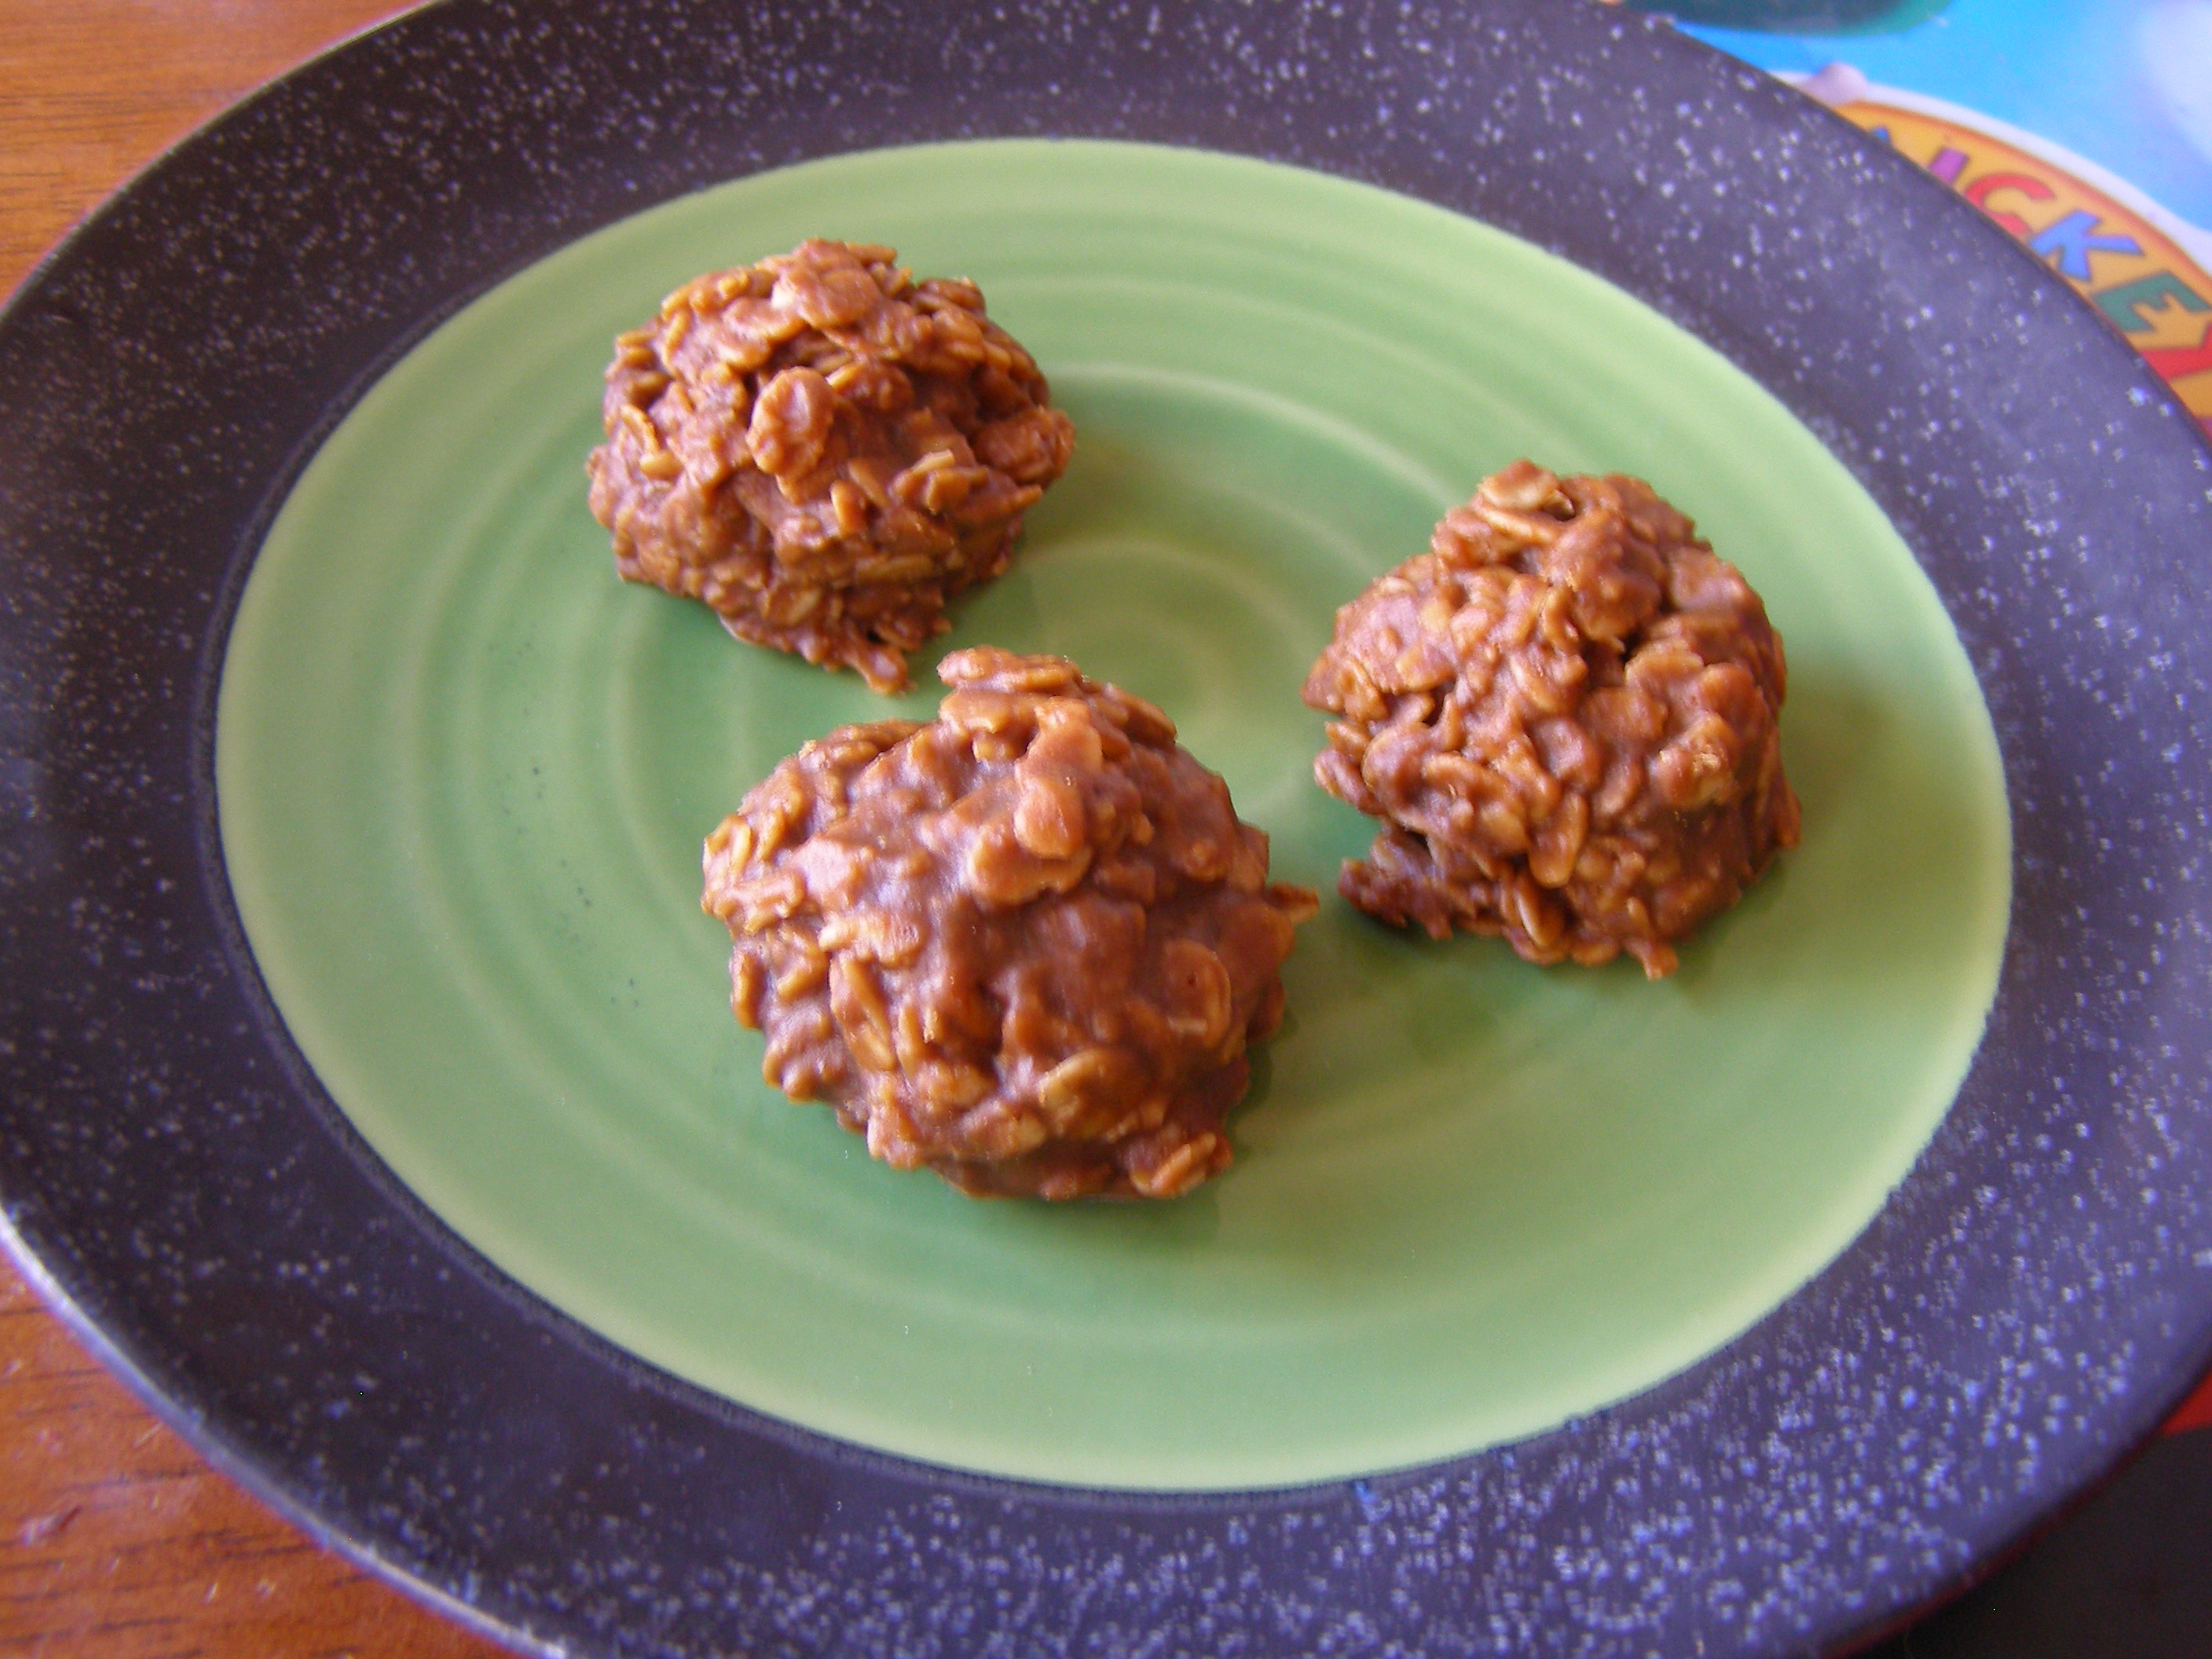 Nutella Cookies Recipe Pinterest